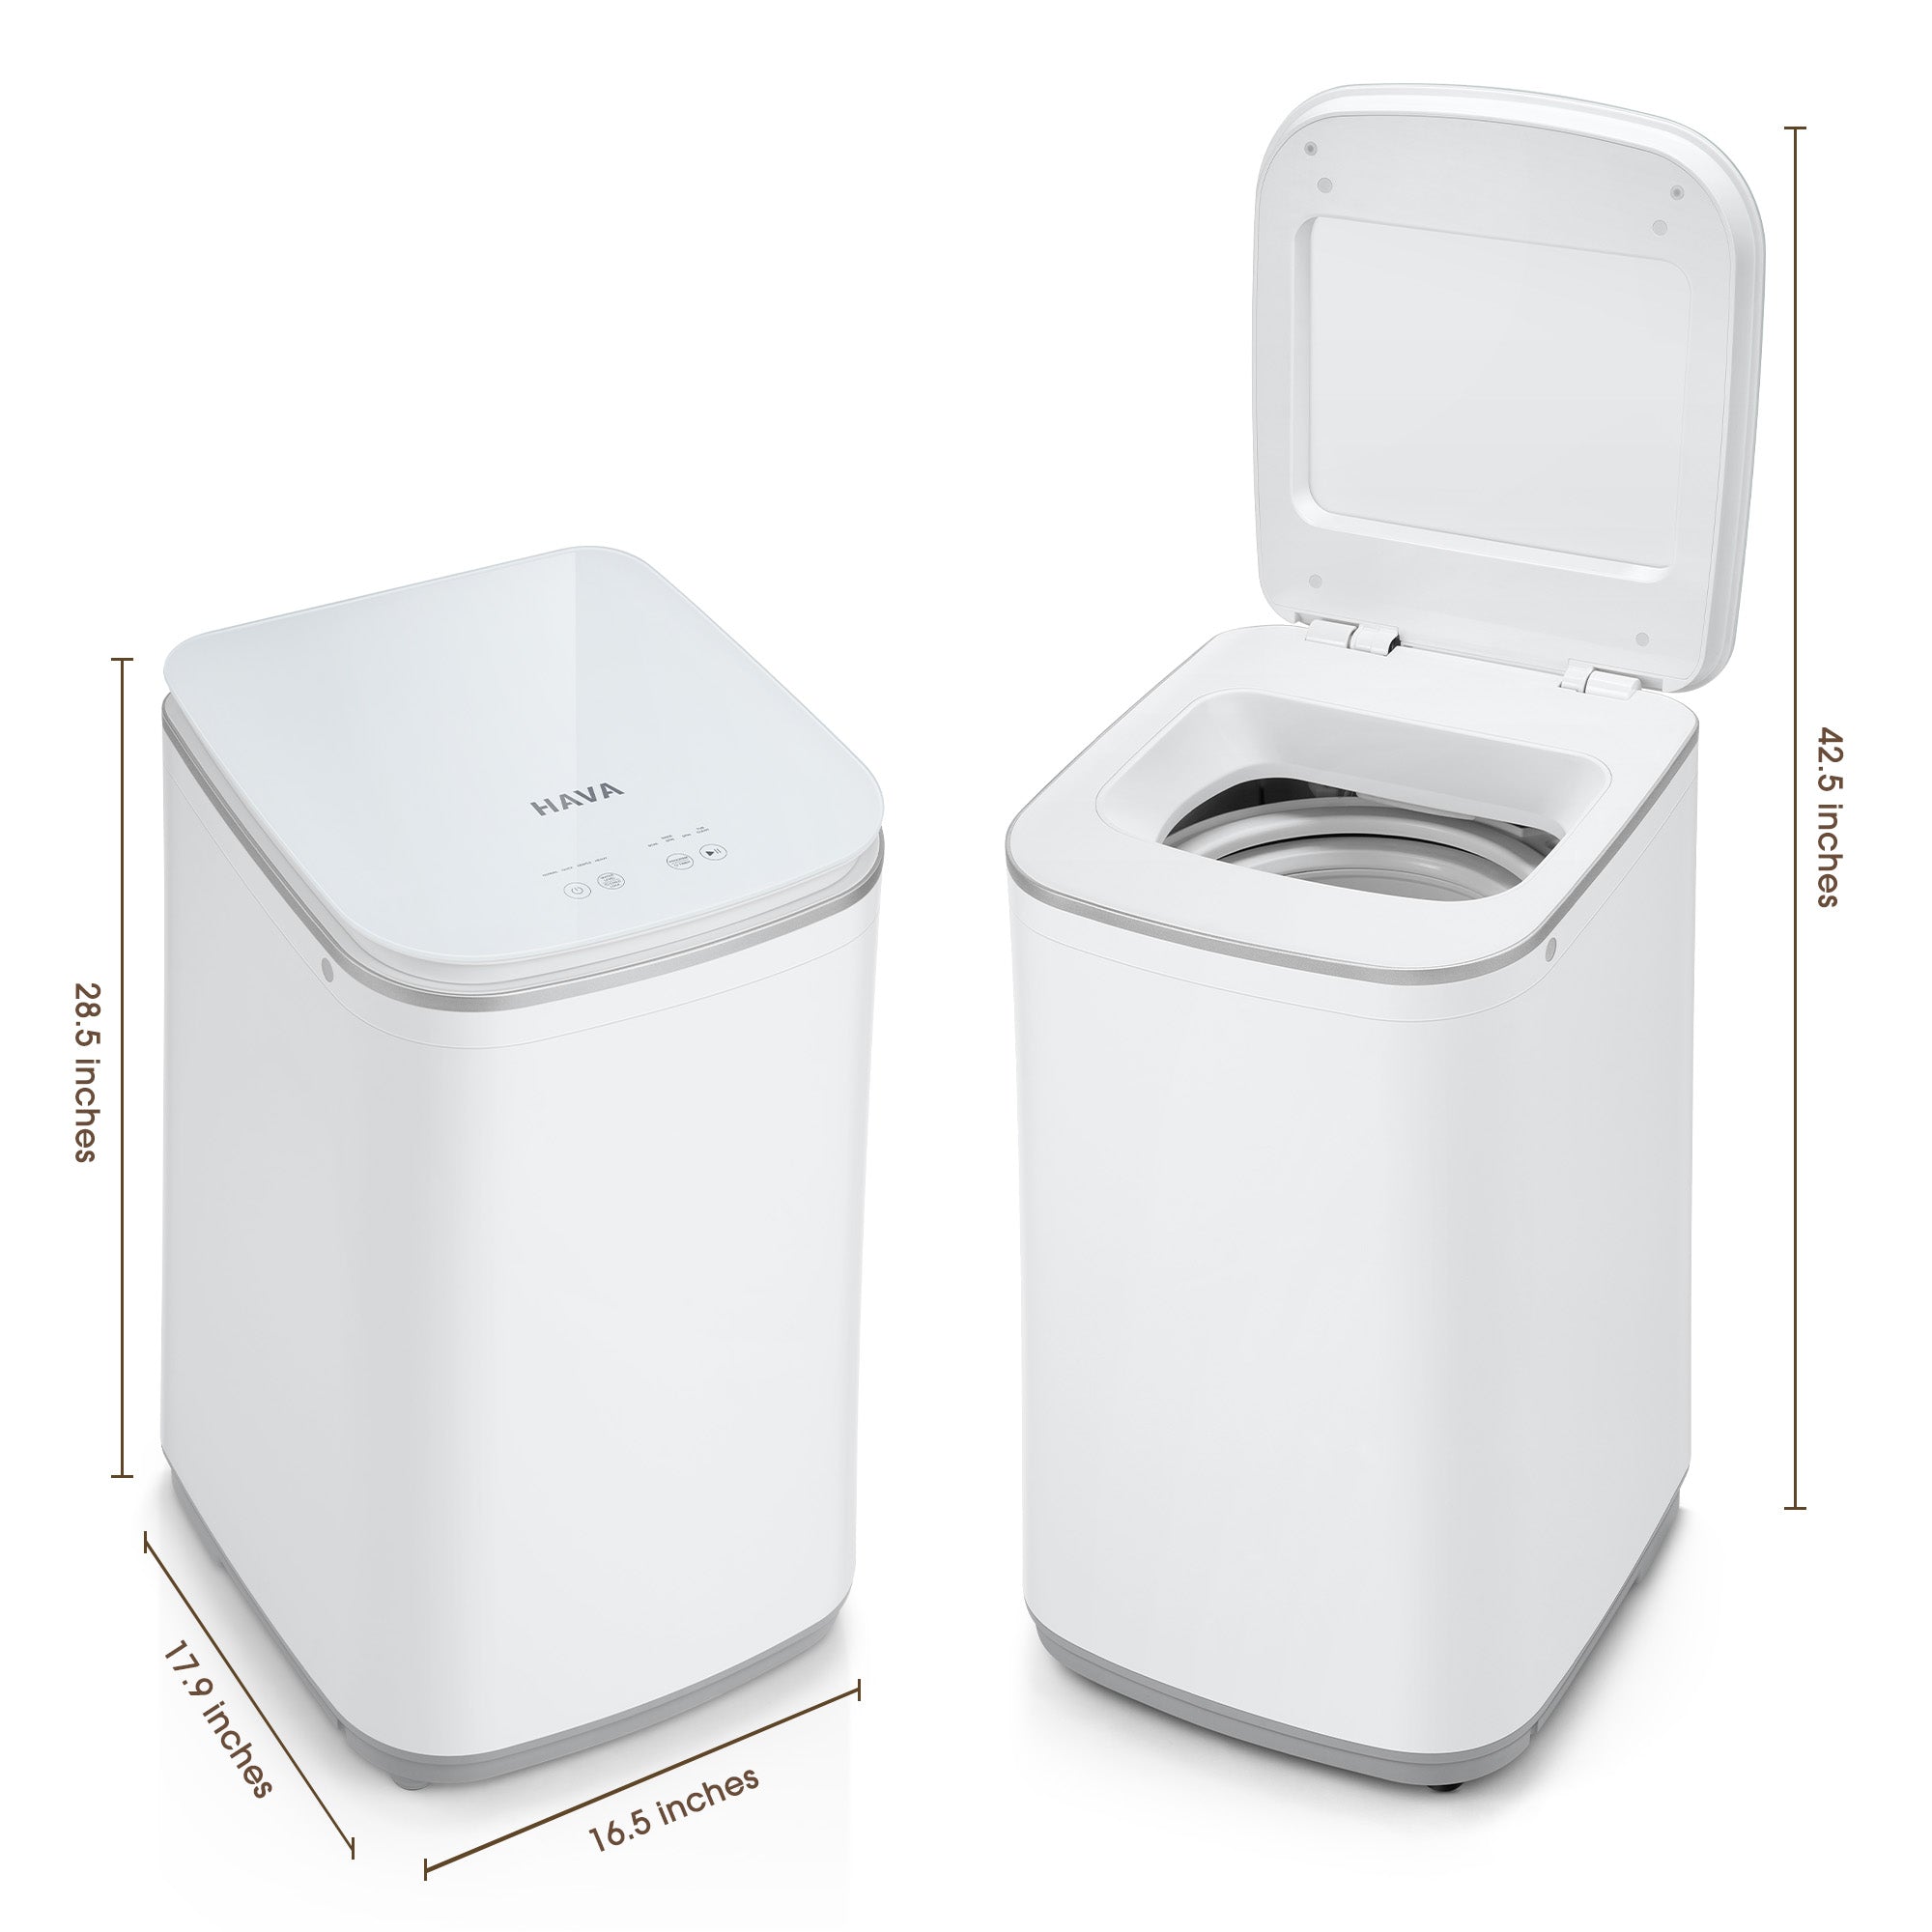 Hava T01 Portable Washing Machine $199.99 (reg $330)